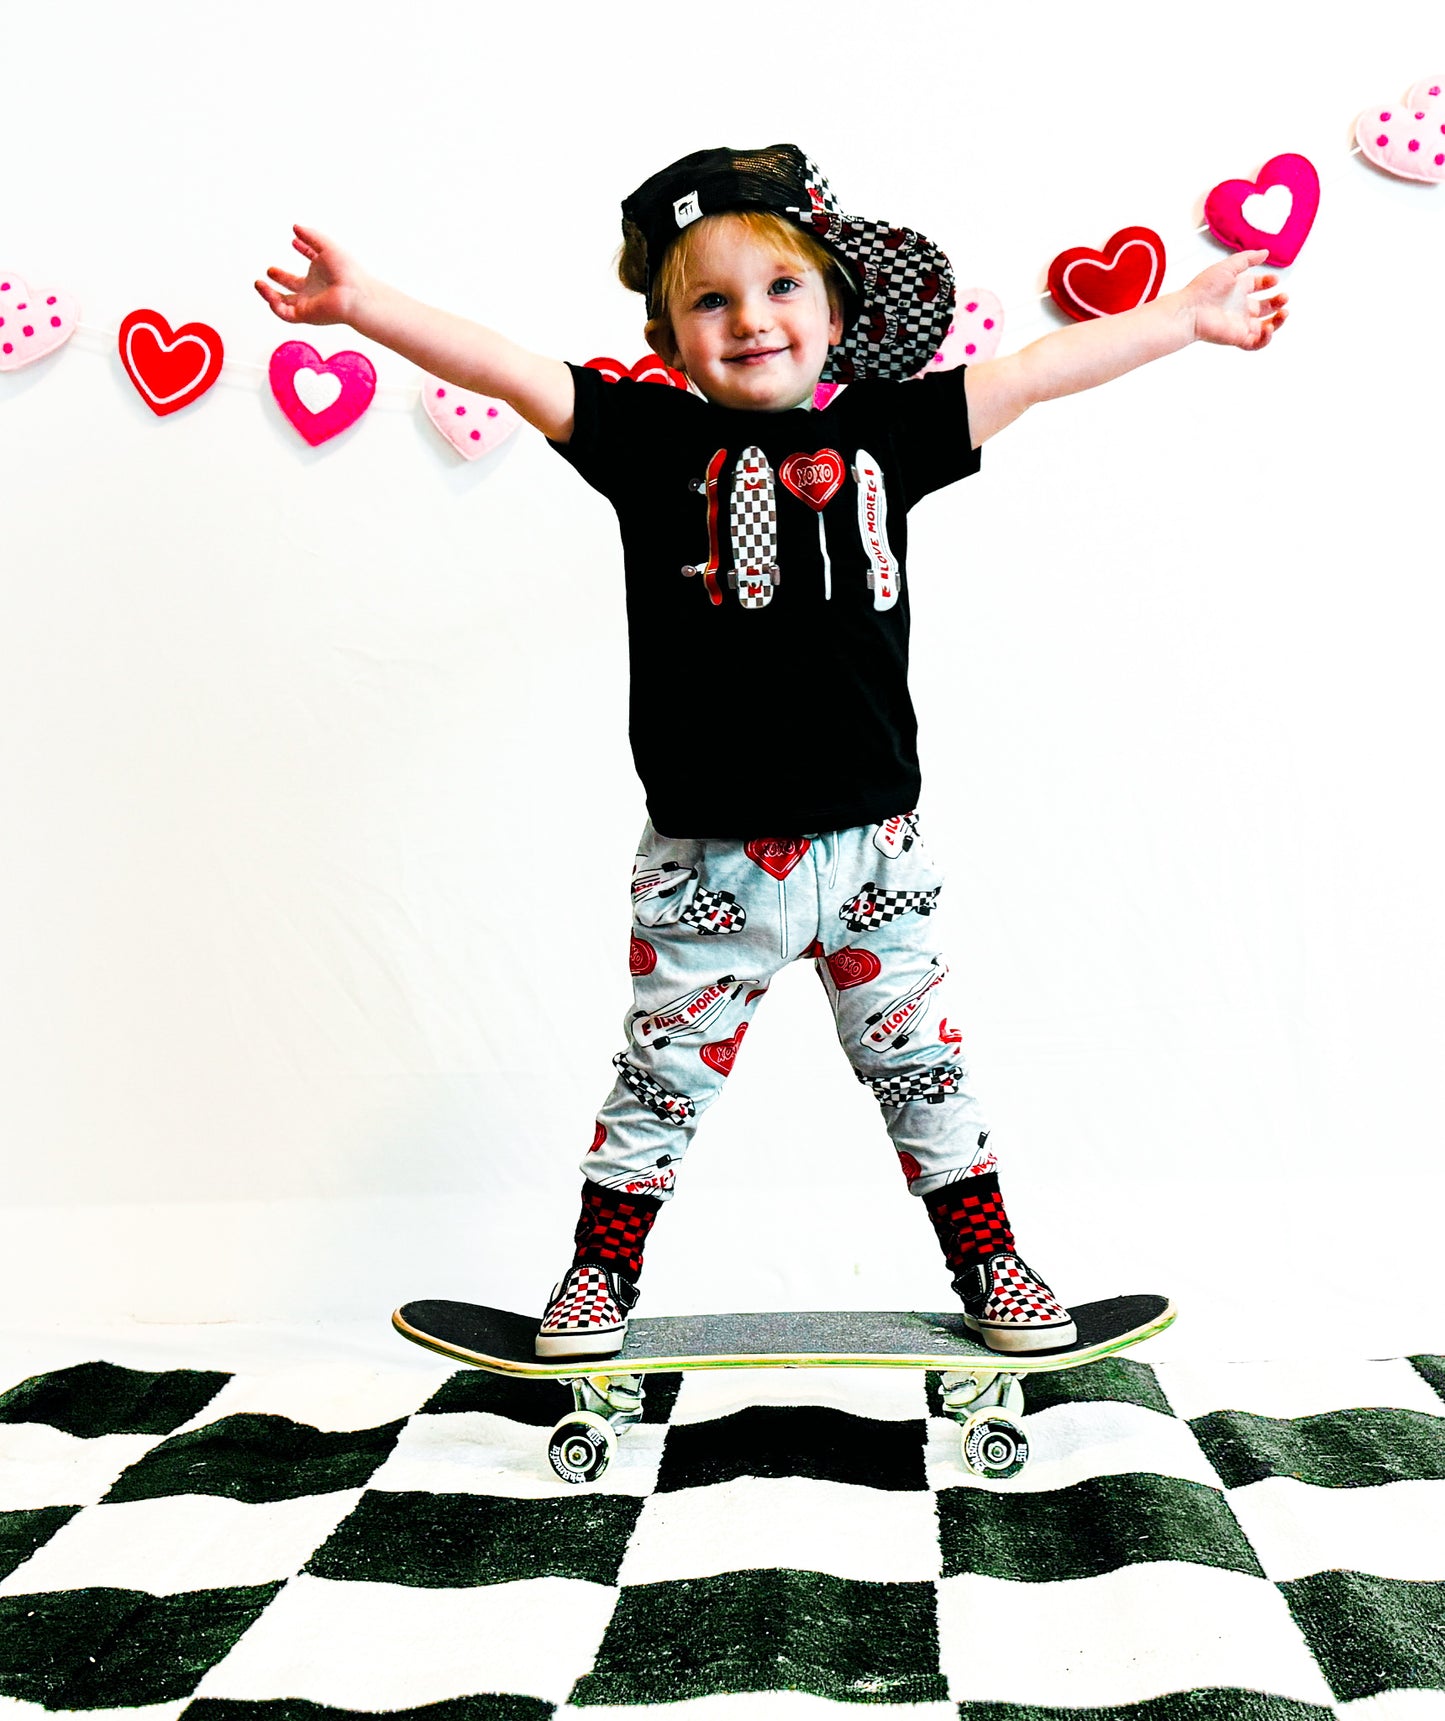 Love more skateboards